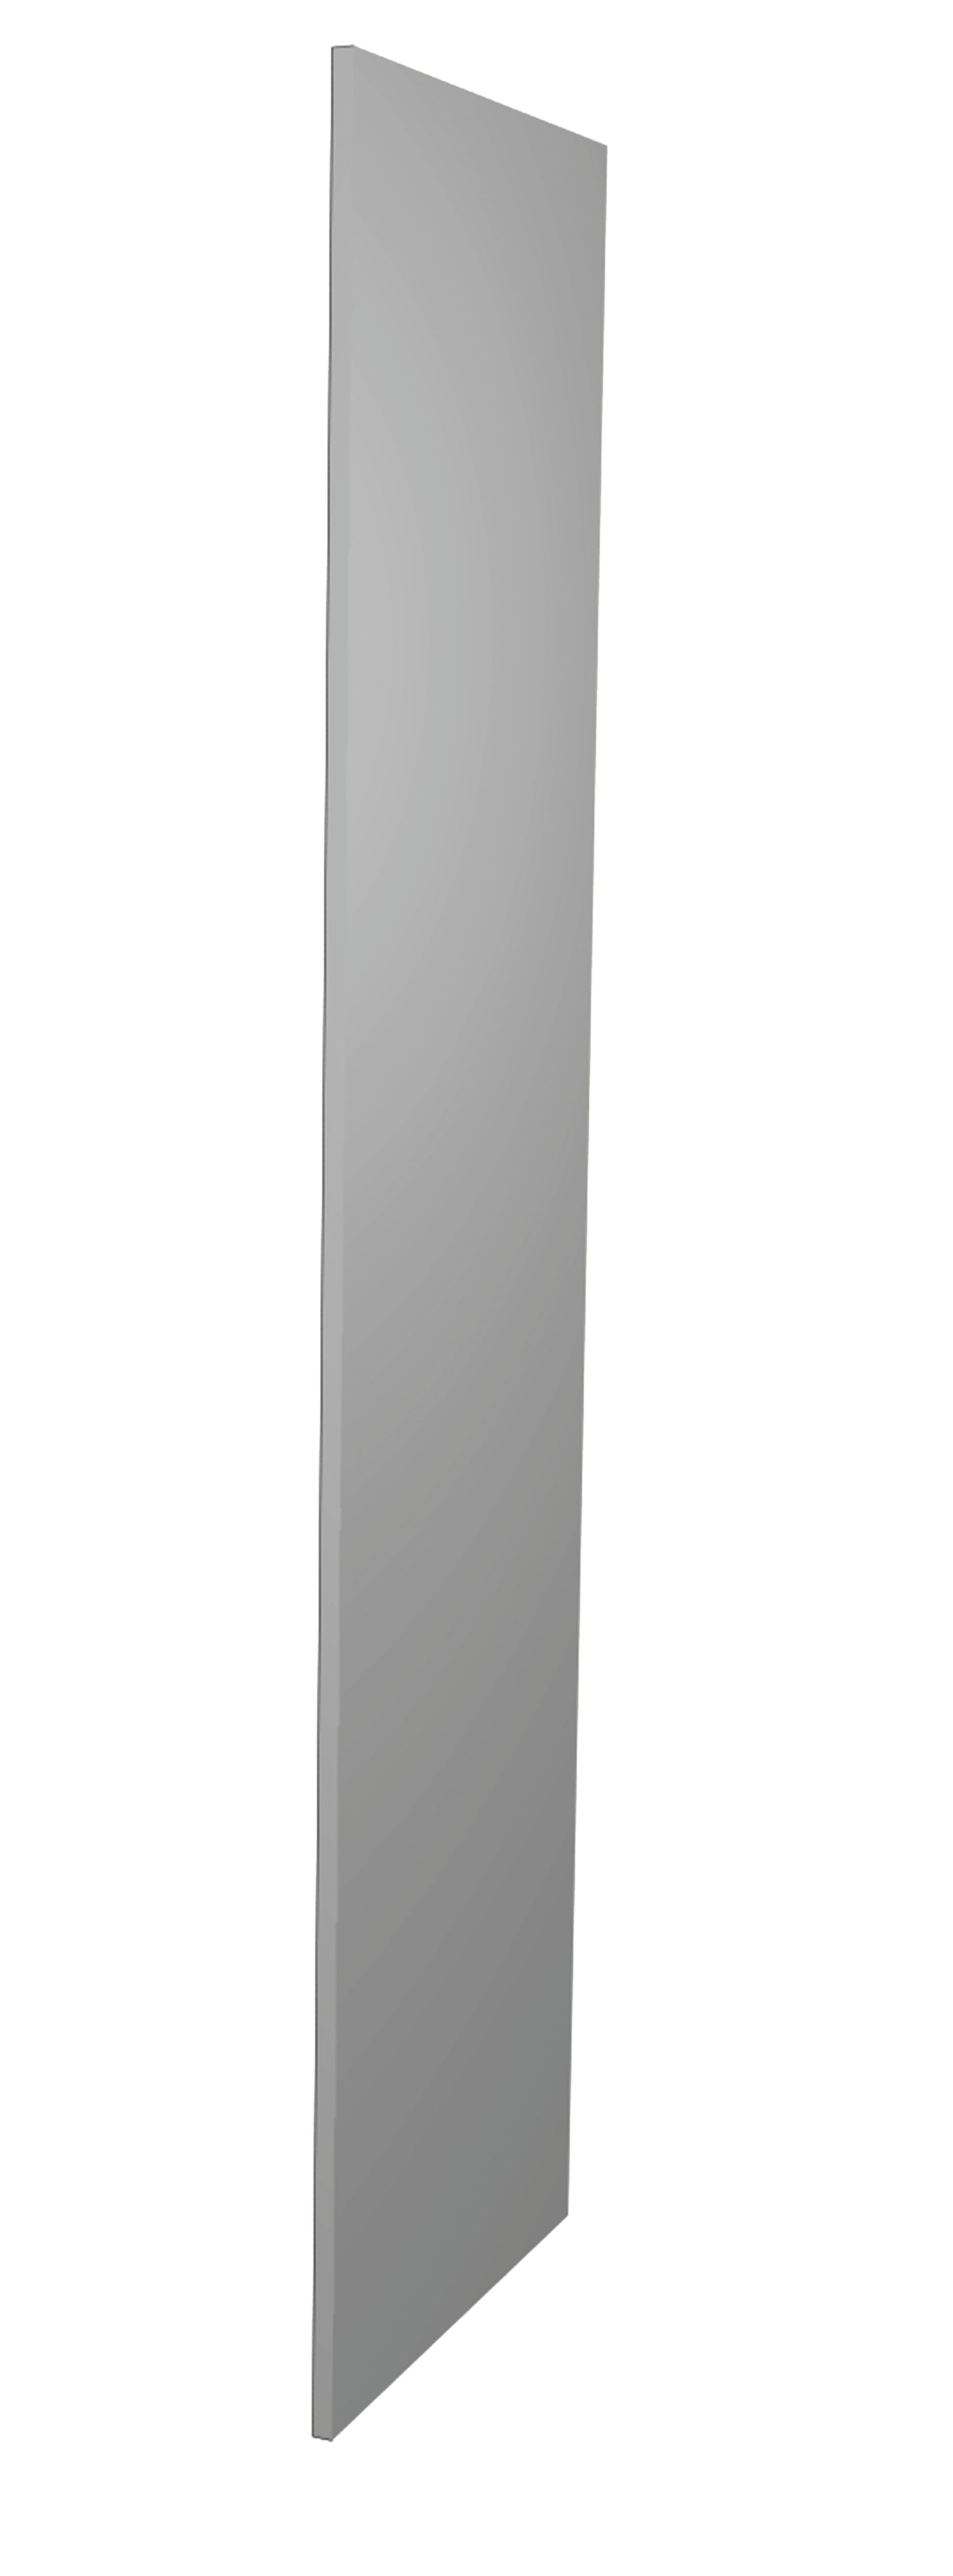 Image of Wickes Orlando/Madison Grey Gloss Decor Tall Panel - 18mm